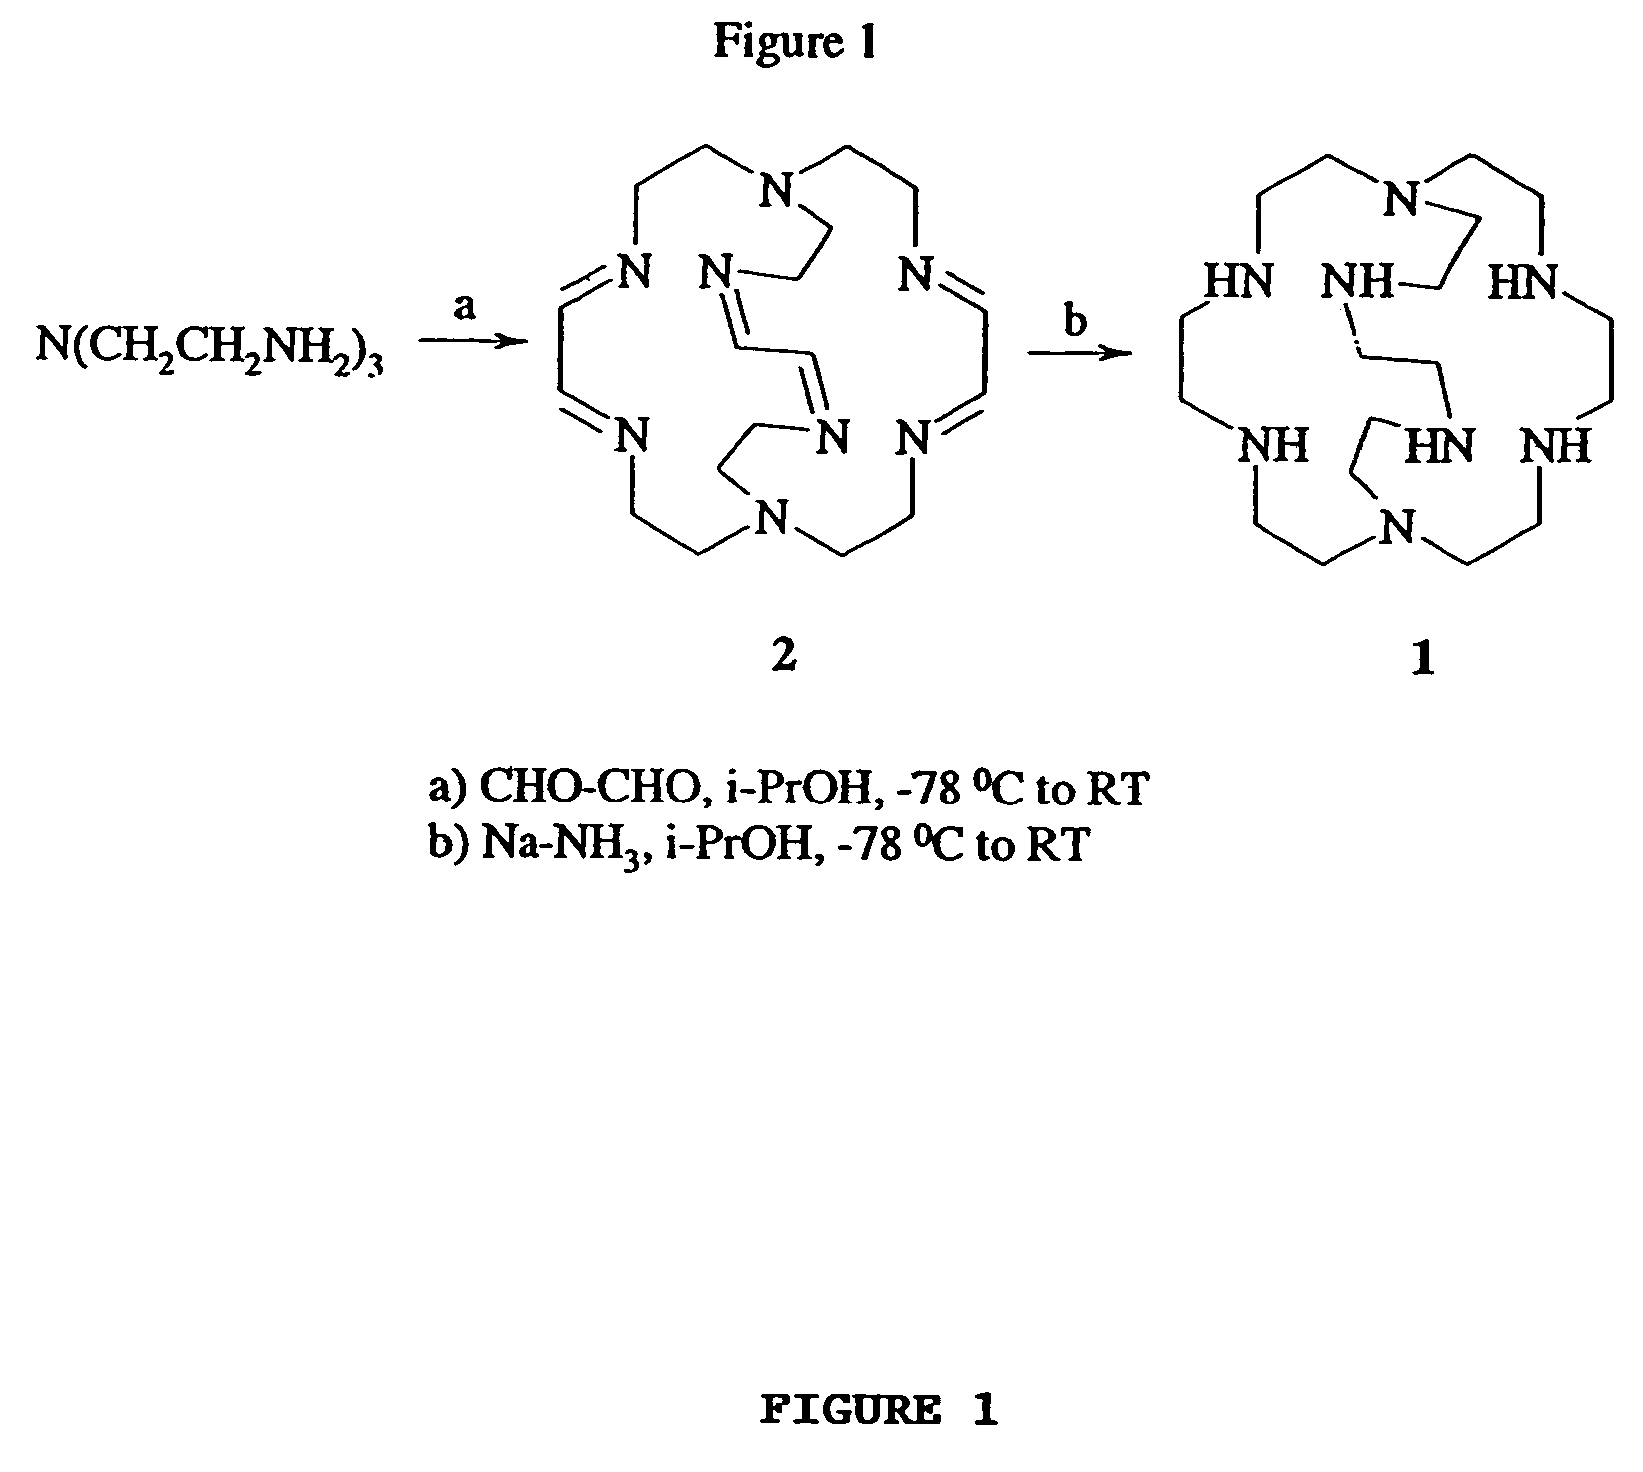 Method of synthesis of 1, 4, 7, 10, 13, 16, 21, 24-octaazabicyclo [8.8.8] hexacosane (1) and 1, 4, 7, 10, 13, 16, 21, 24-octaazabicyclo [8.8.8] hexacosa, 4, 6, 13, 15, 21, 23-hexaene (2)